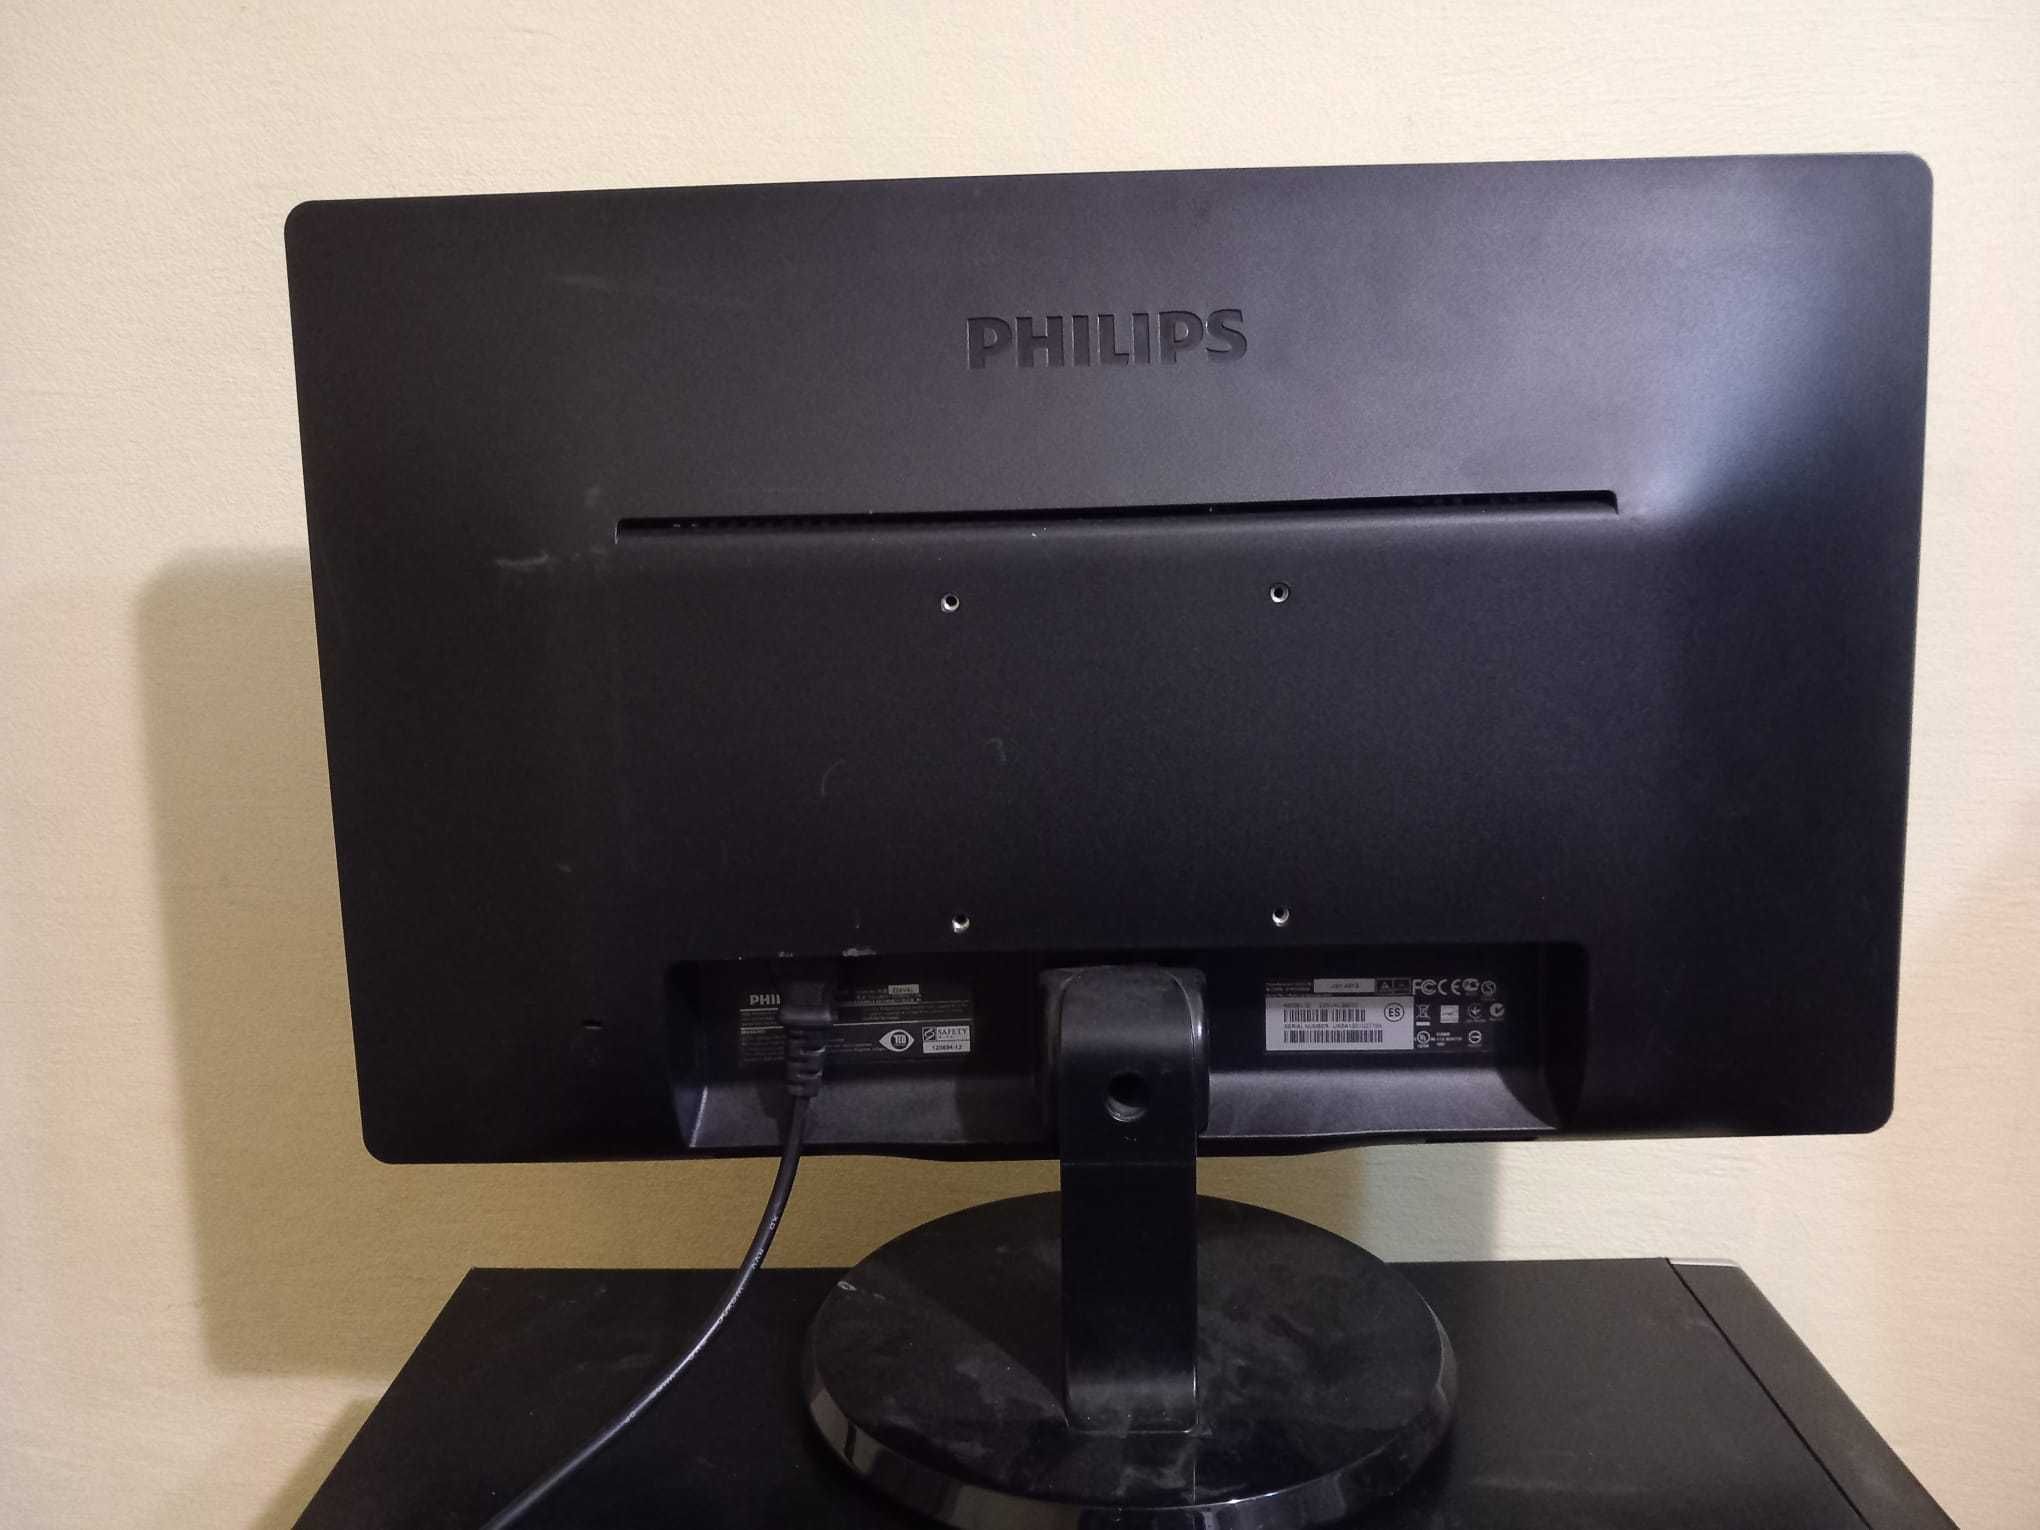 Monitor Philips 21.5 inch full hd ( 1920 x 1080) VGA + DVI